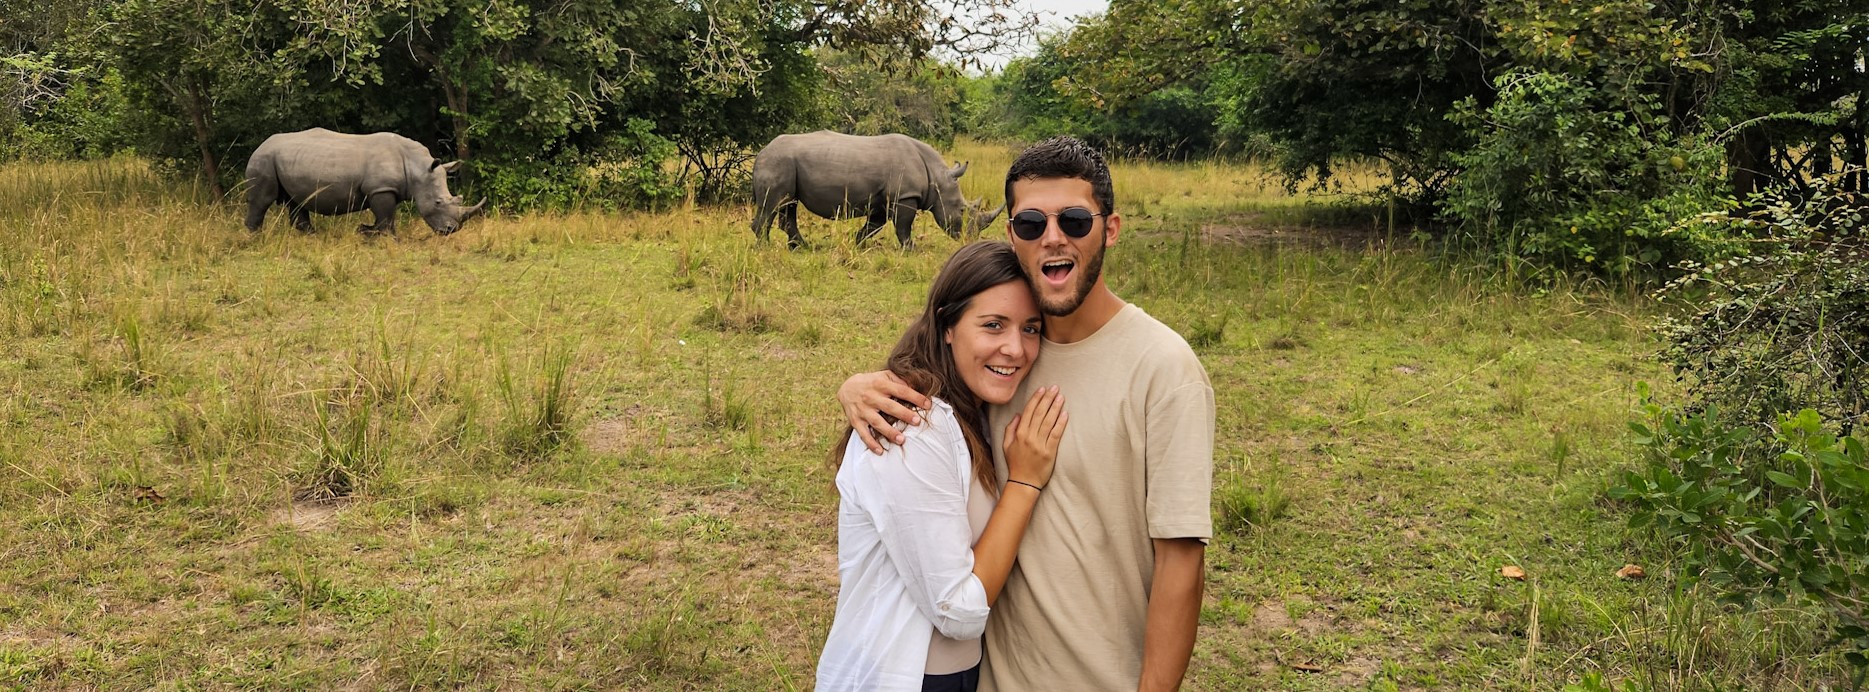 Lisa & Pol in Ziwa rhino sanctuary in Uganda